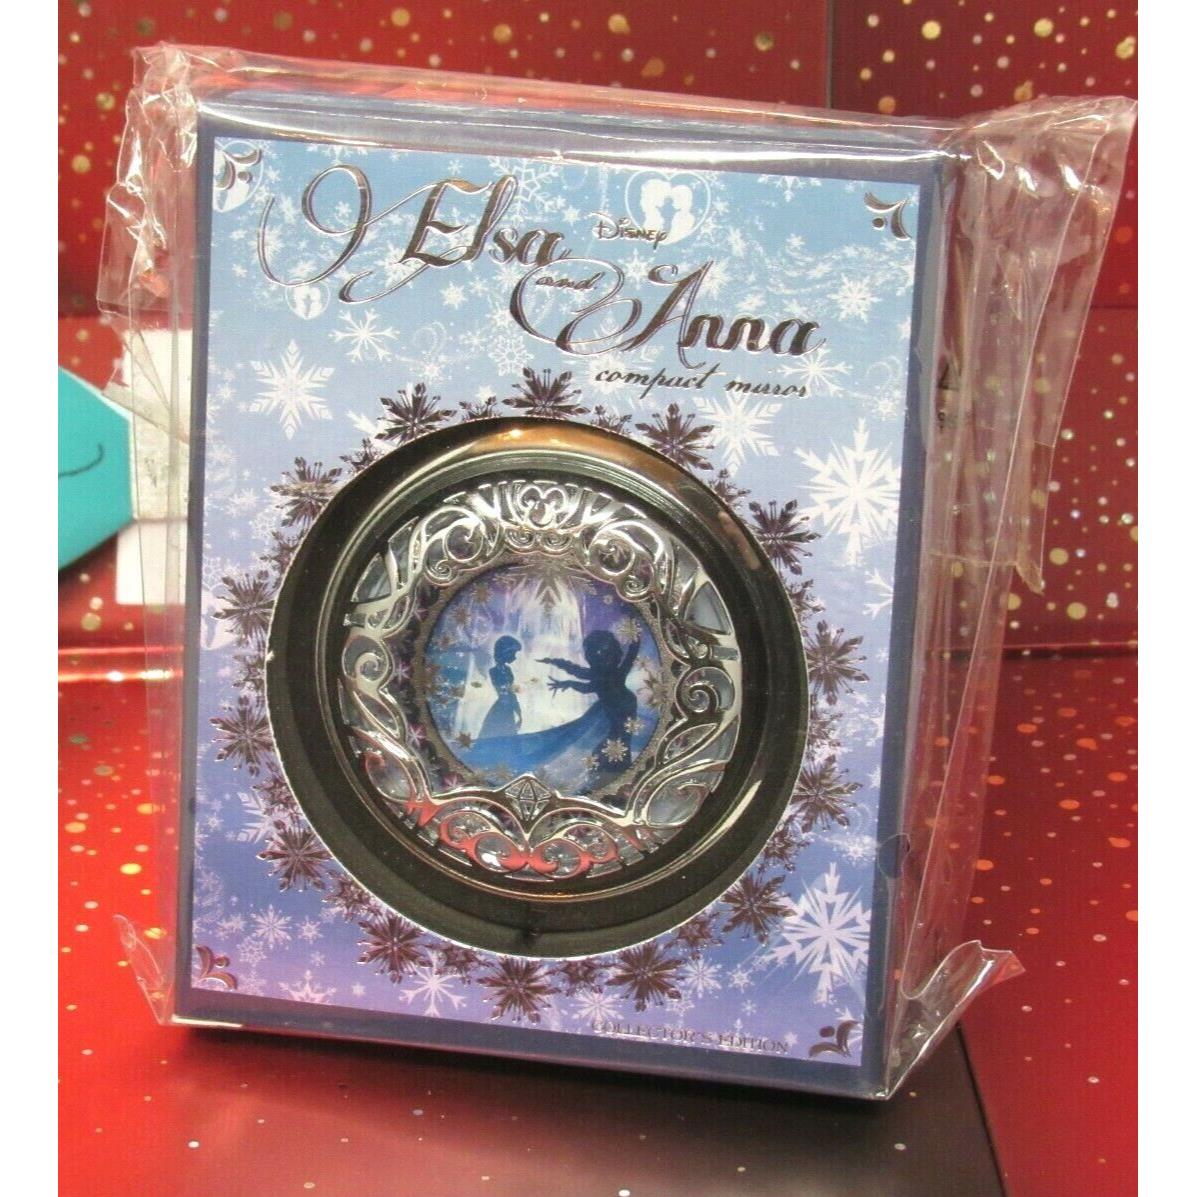 Sephora Disney Frozen Elsa and Anna Collectors Edition Compact Mirror